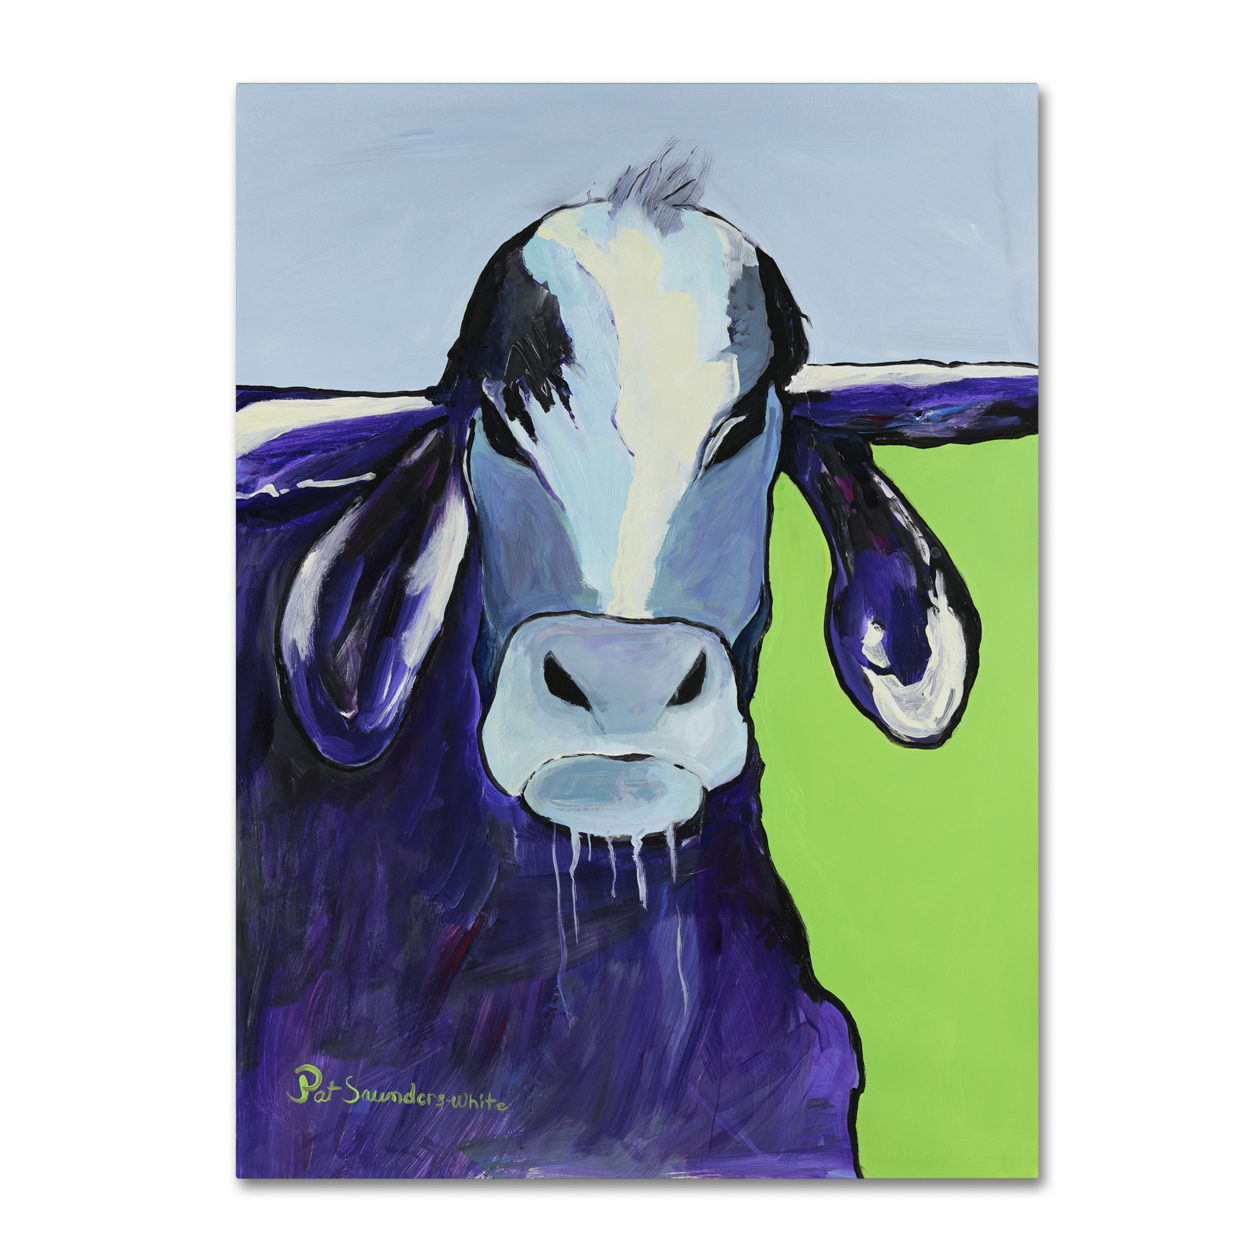 Pat Saunders-White 'Bull Drool II' Canvas Wall Art 35 X 47 Inches